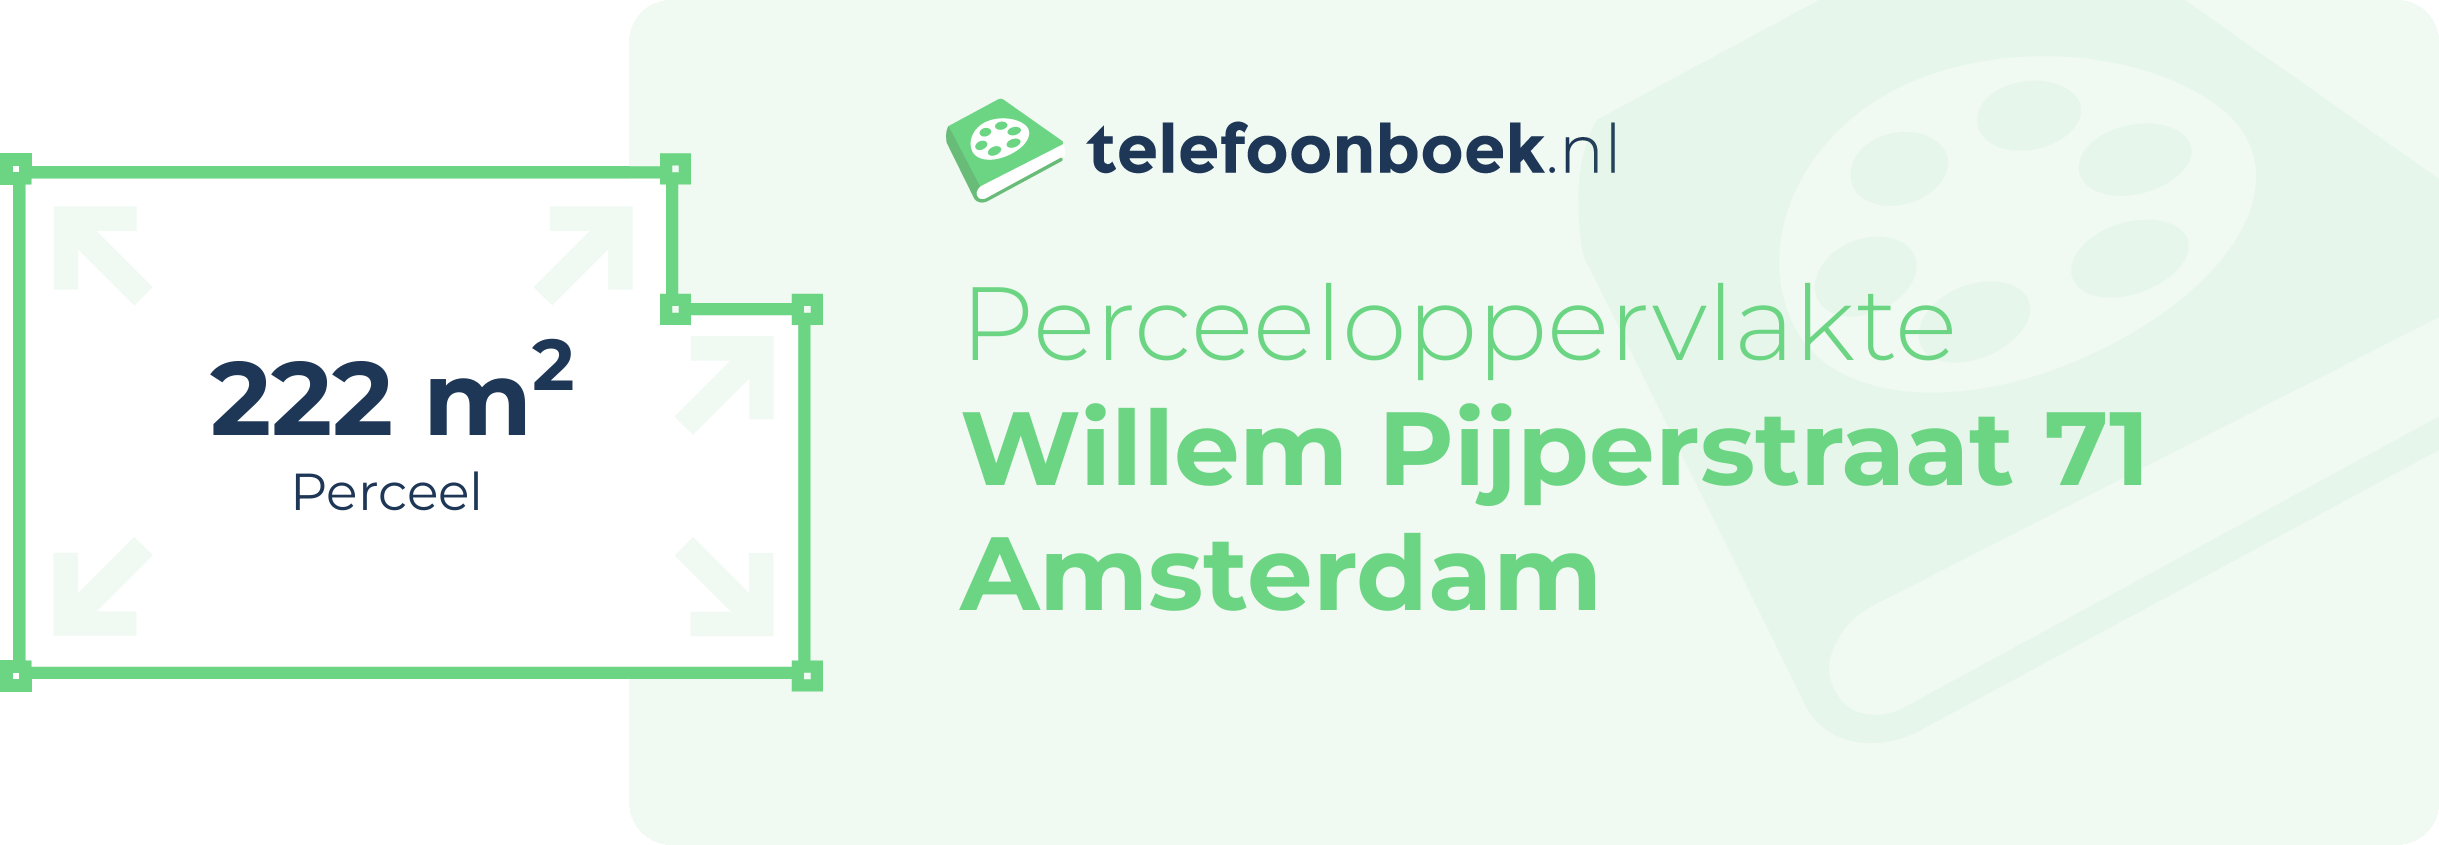 Perceeloppervlakte Willem Pijperstraat 71 Amsterdam